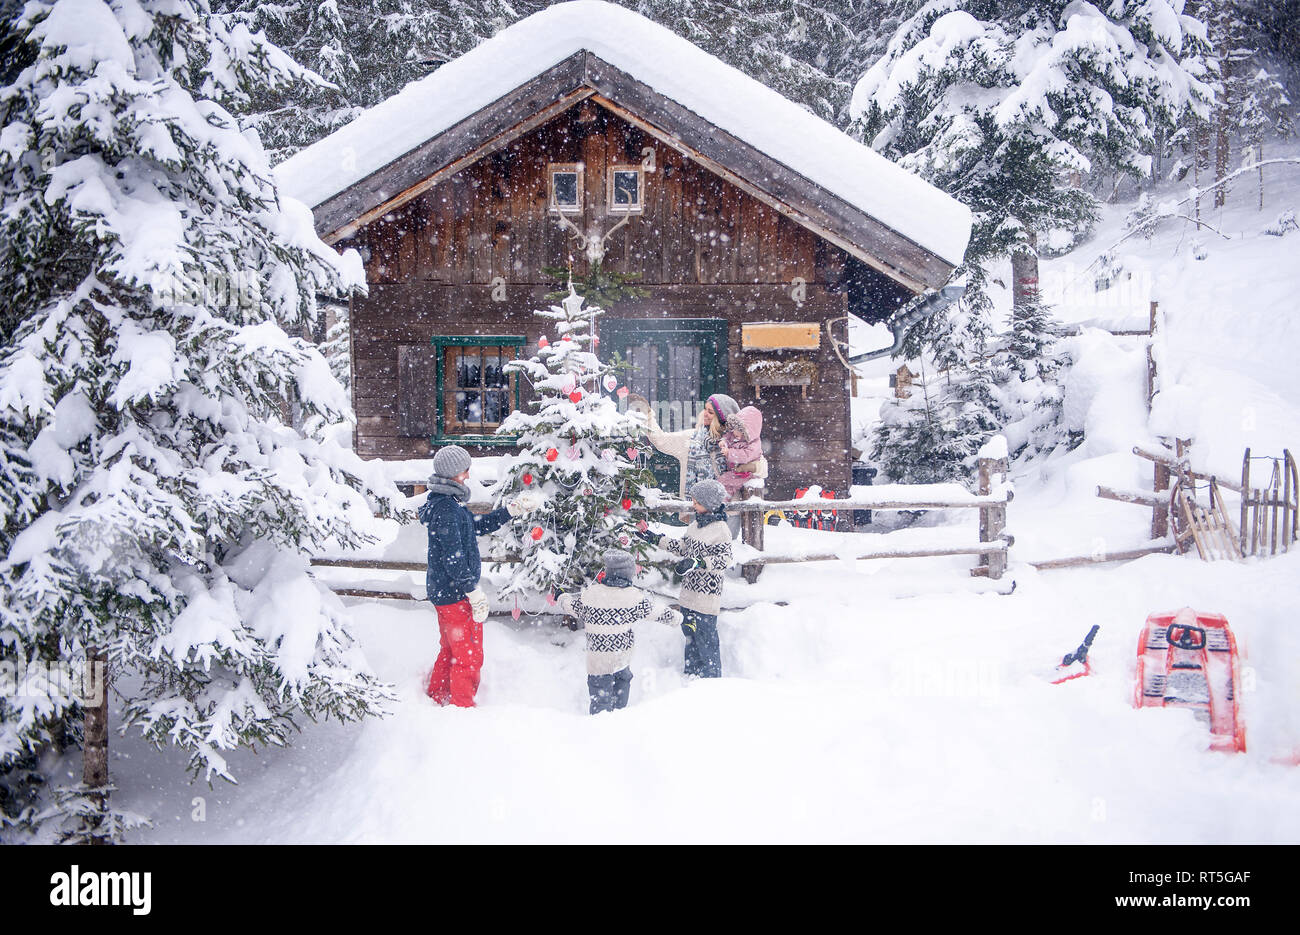 Austria, Altenmarkt-Zauchensee, family decorating Christmas tree at wooden house Stock Photo